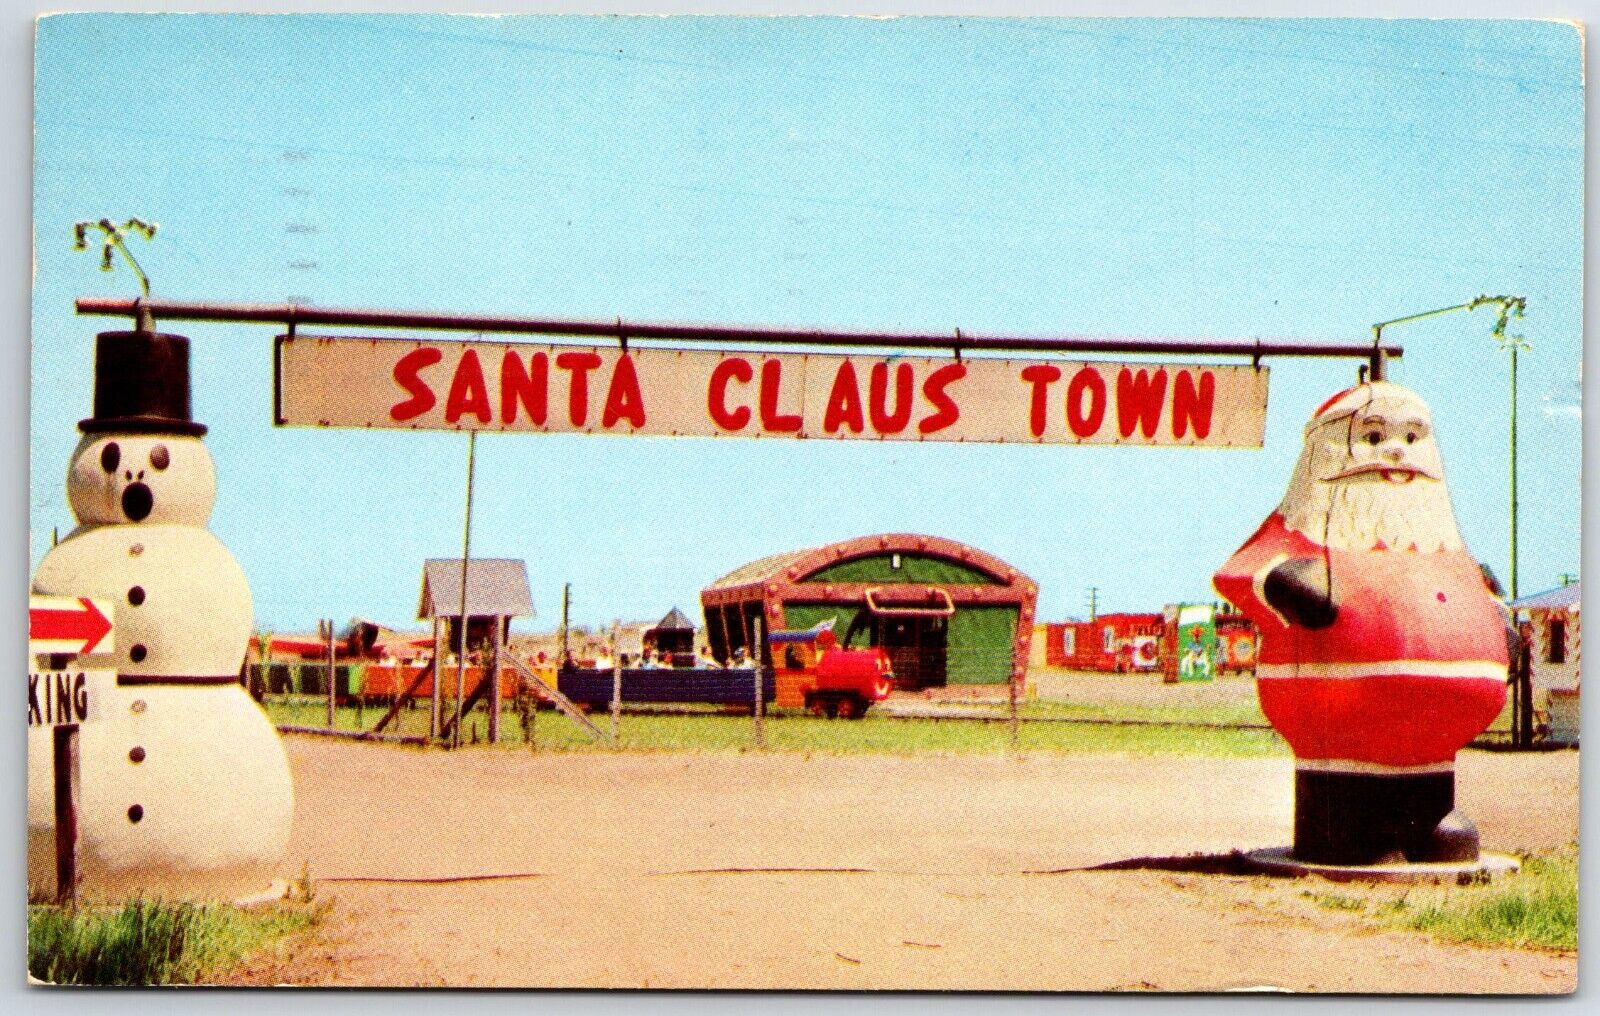 santa claus town anoka minnesota treasure chest Postcard 1956